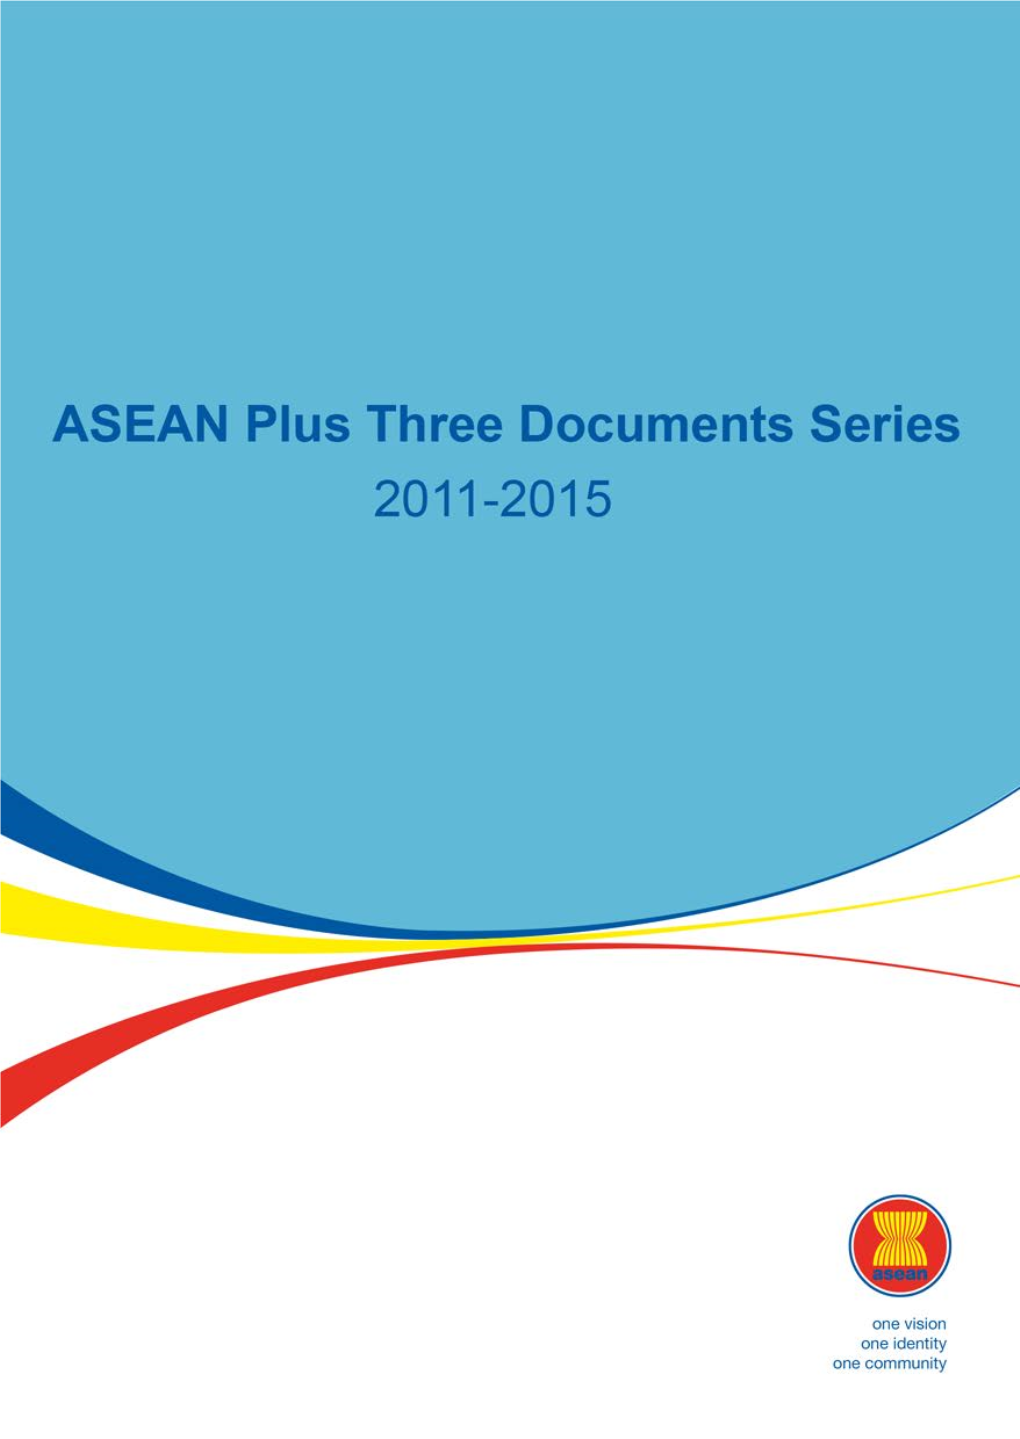 ASEAN Plus Three DOCUMENTS SERIES 2011-2015